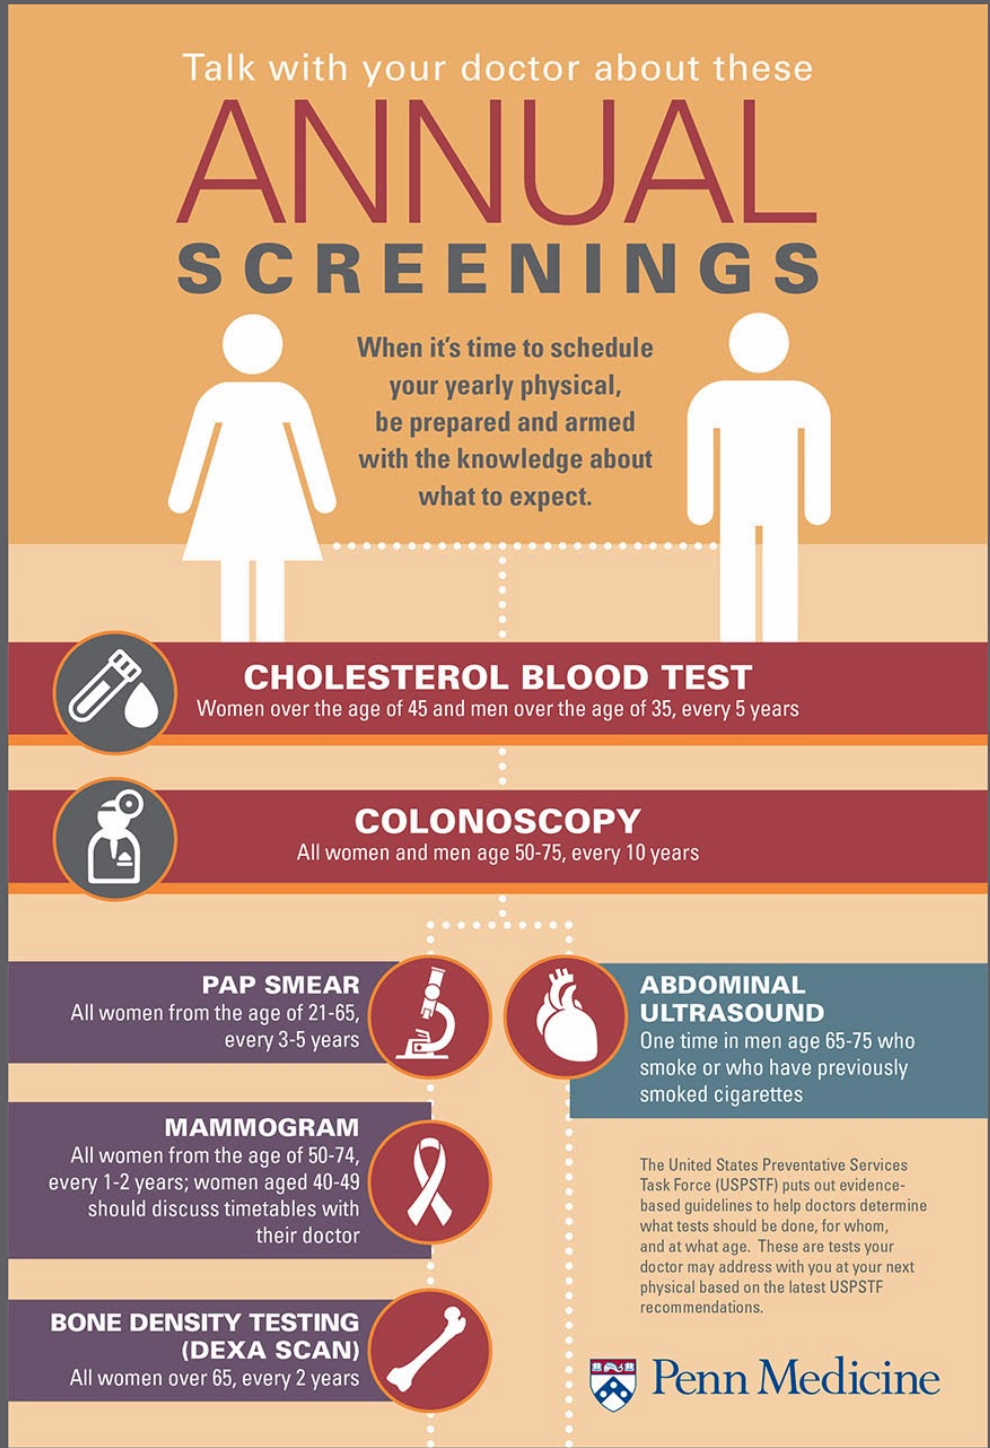 Penn Medicine's chart for annual screenings